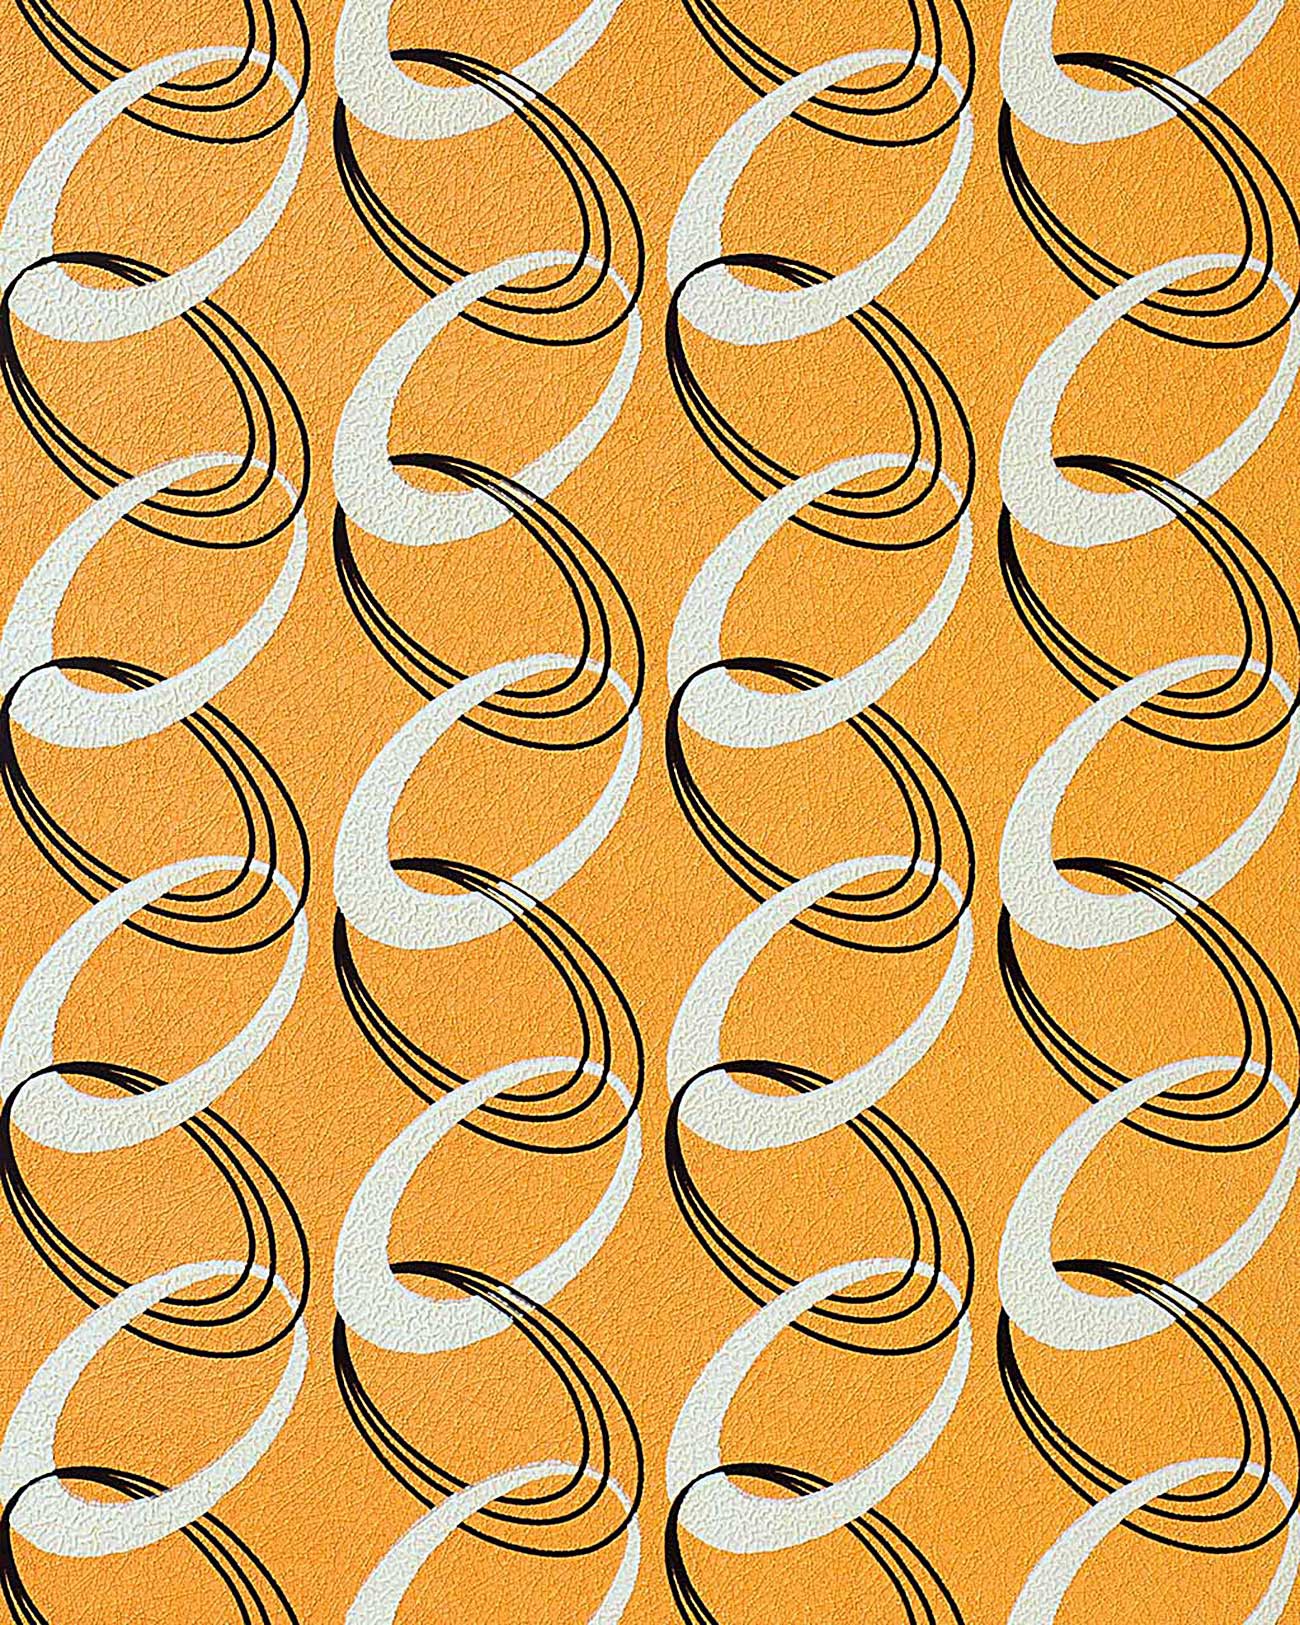 Rings Wallpaper Textured 70s Style Mustard Yellow White Black